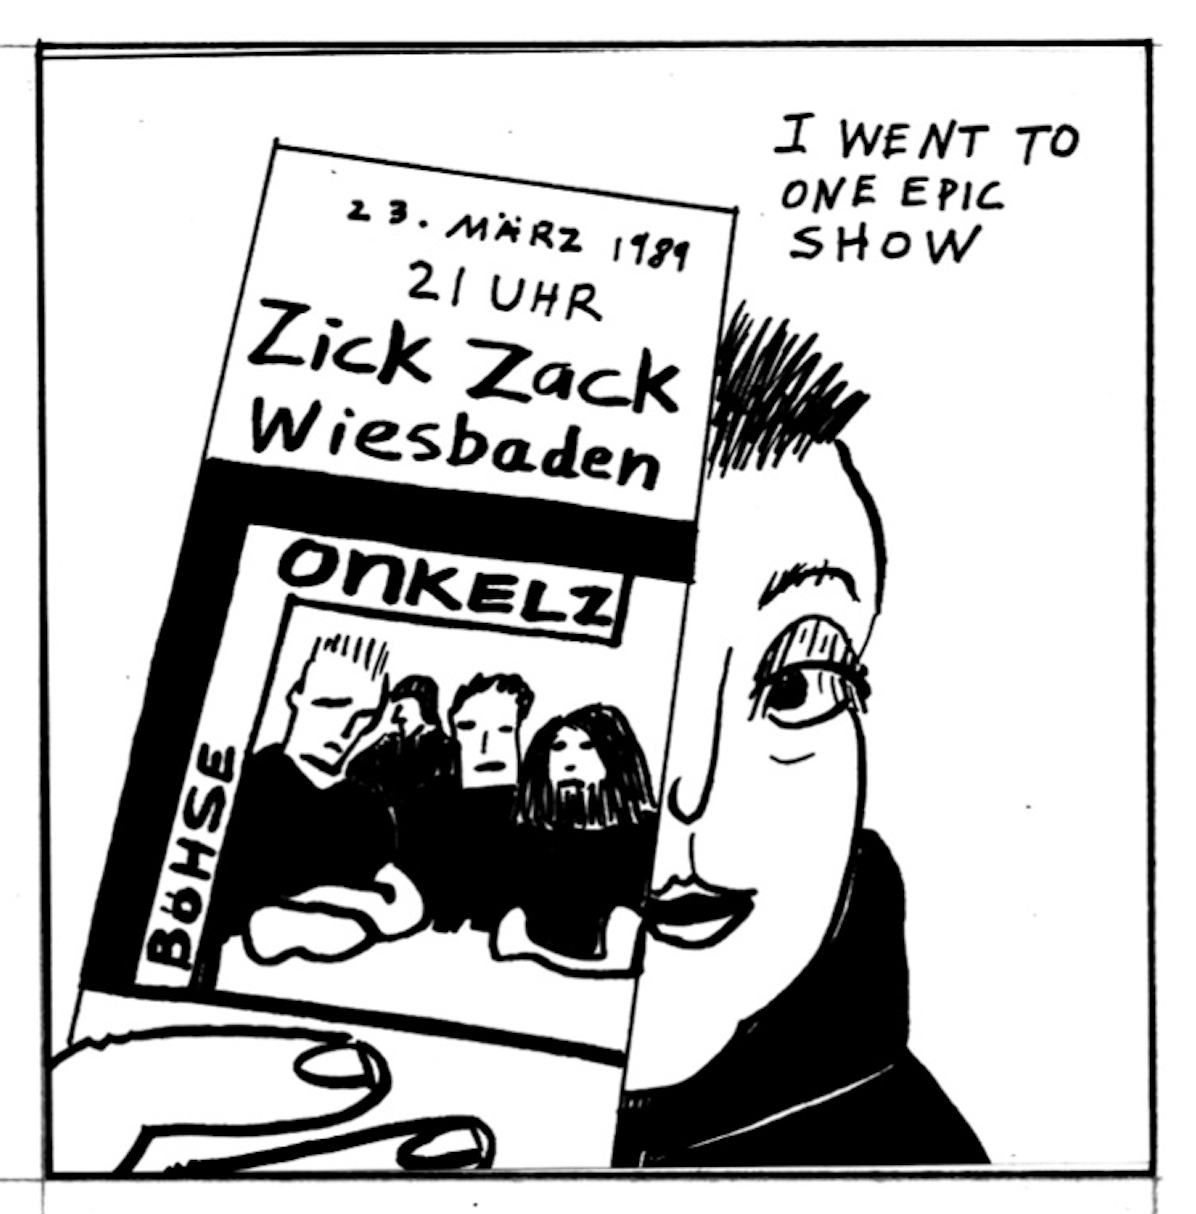 â€œI went to one epic show.â€ Michaela, hair spiked up and wearing makeup, holds a show poster that reads, â€œ23 MÃ¤rz 1989, 21 UHR, Zick Zack Wiesbaden,â€ with an album cover for â€œBÃ¶hse, Onkelz.â€